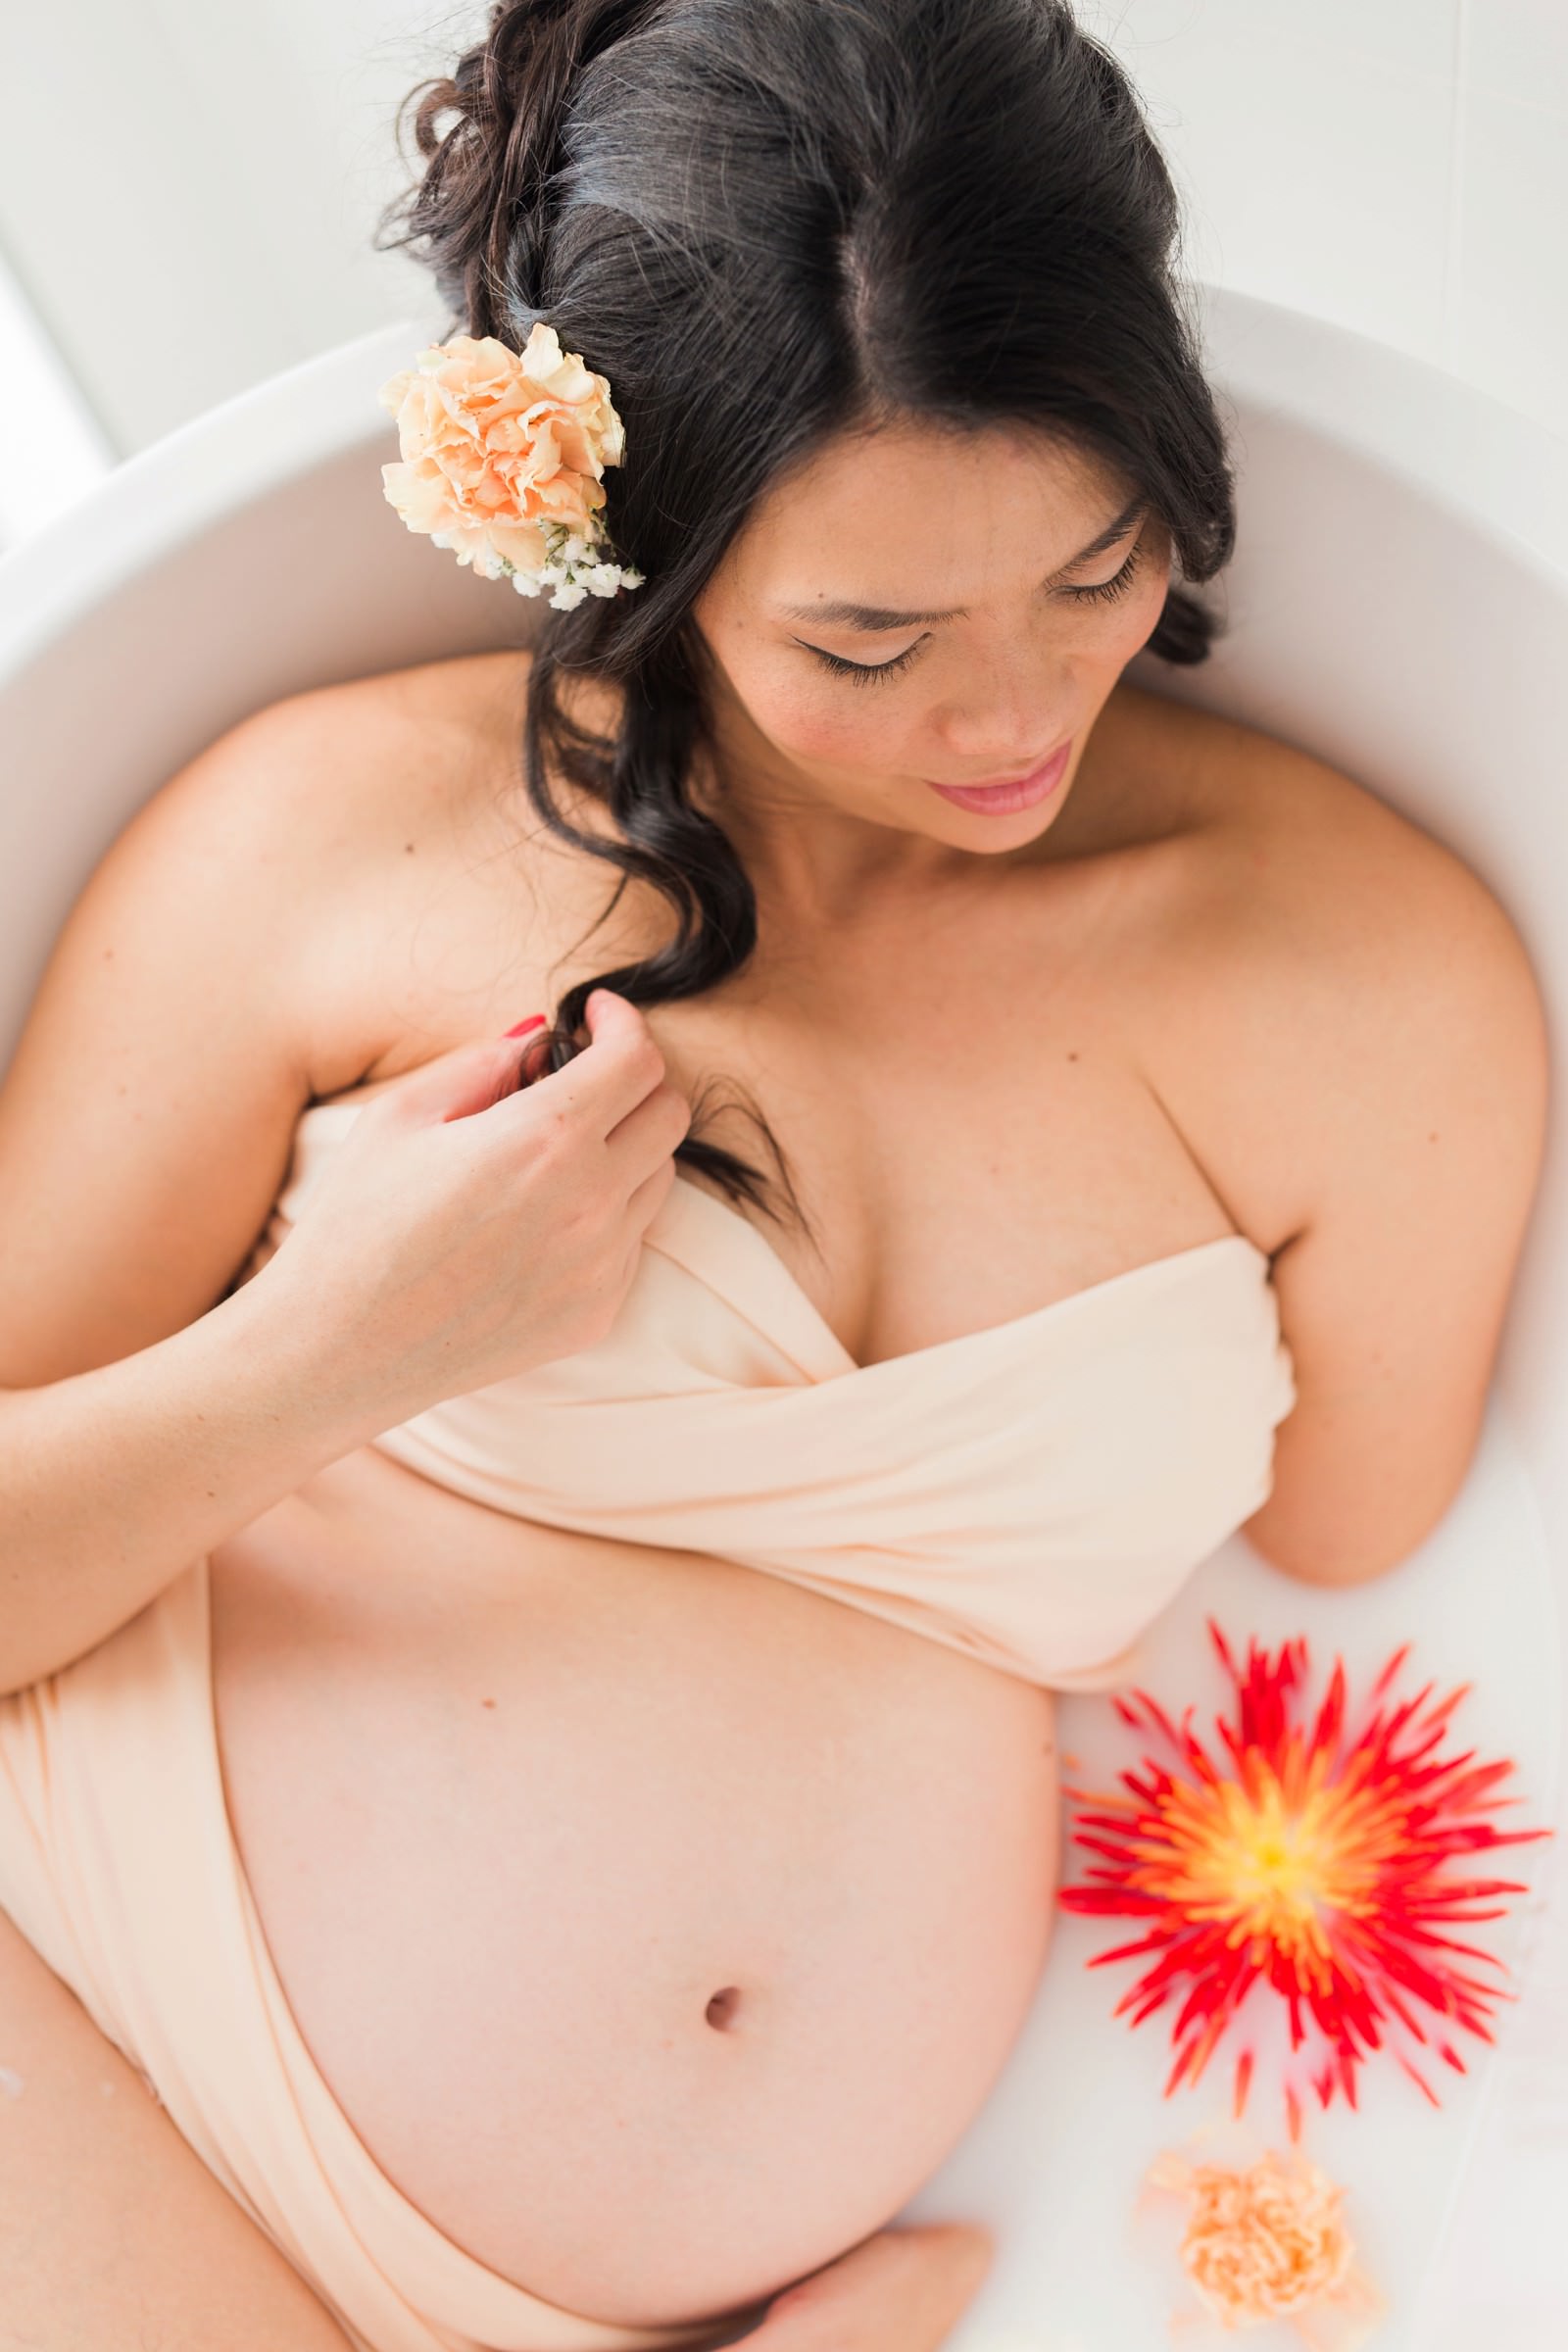 Milk bath pregnancy photoshoot by Mario Colli Photography